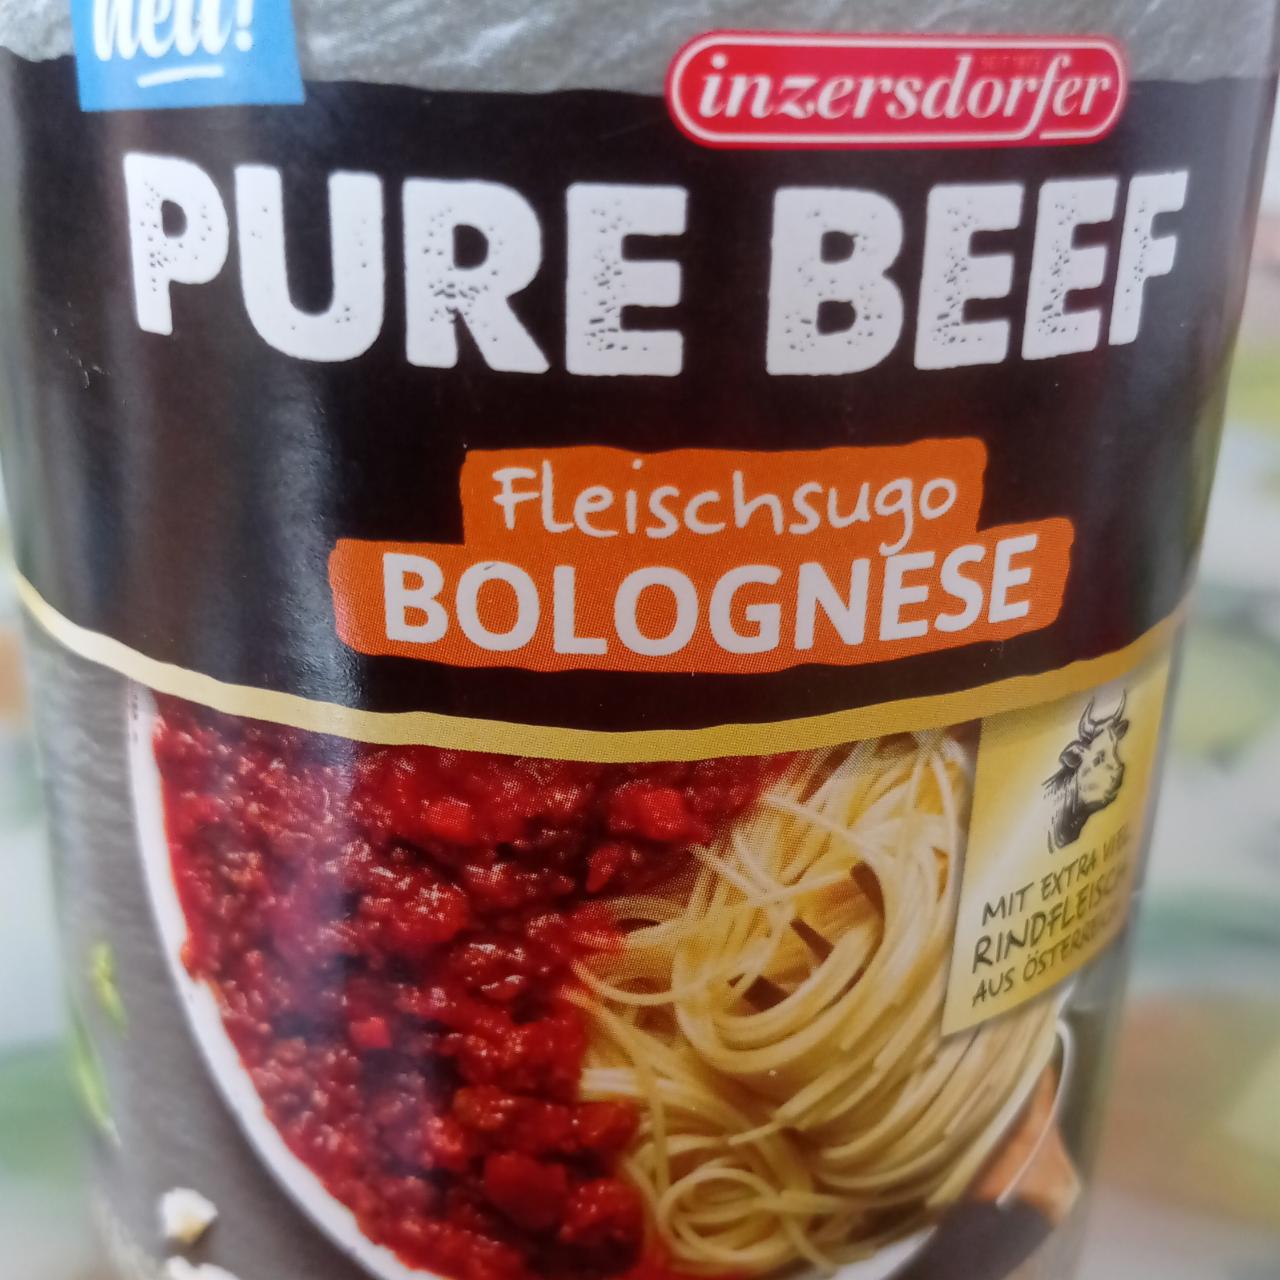 Фото - Соус Pure Beef Fleischsugo Bolognese Inzersdorfer